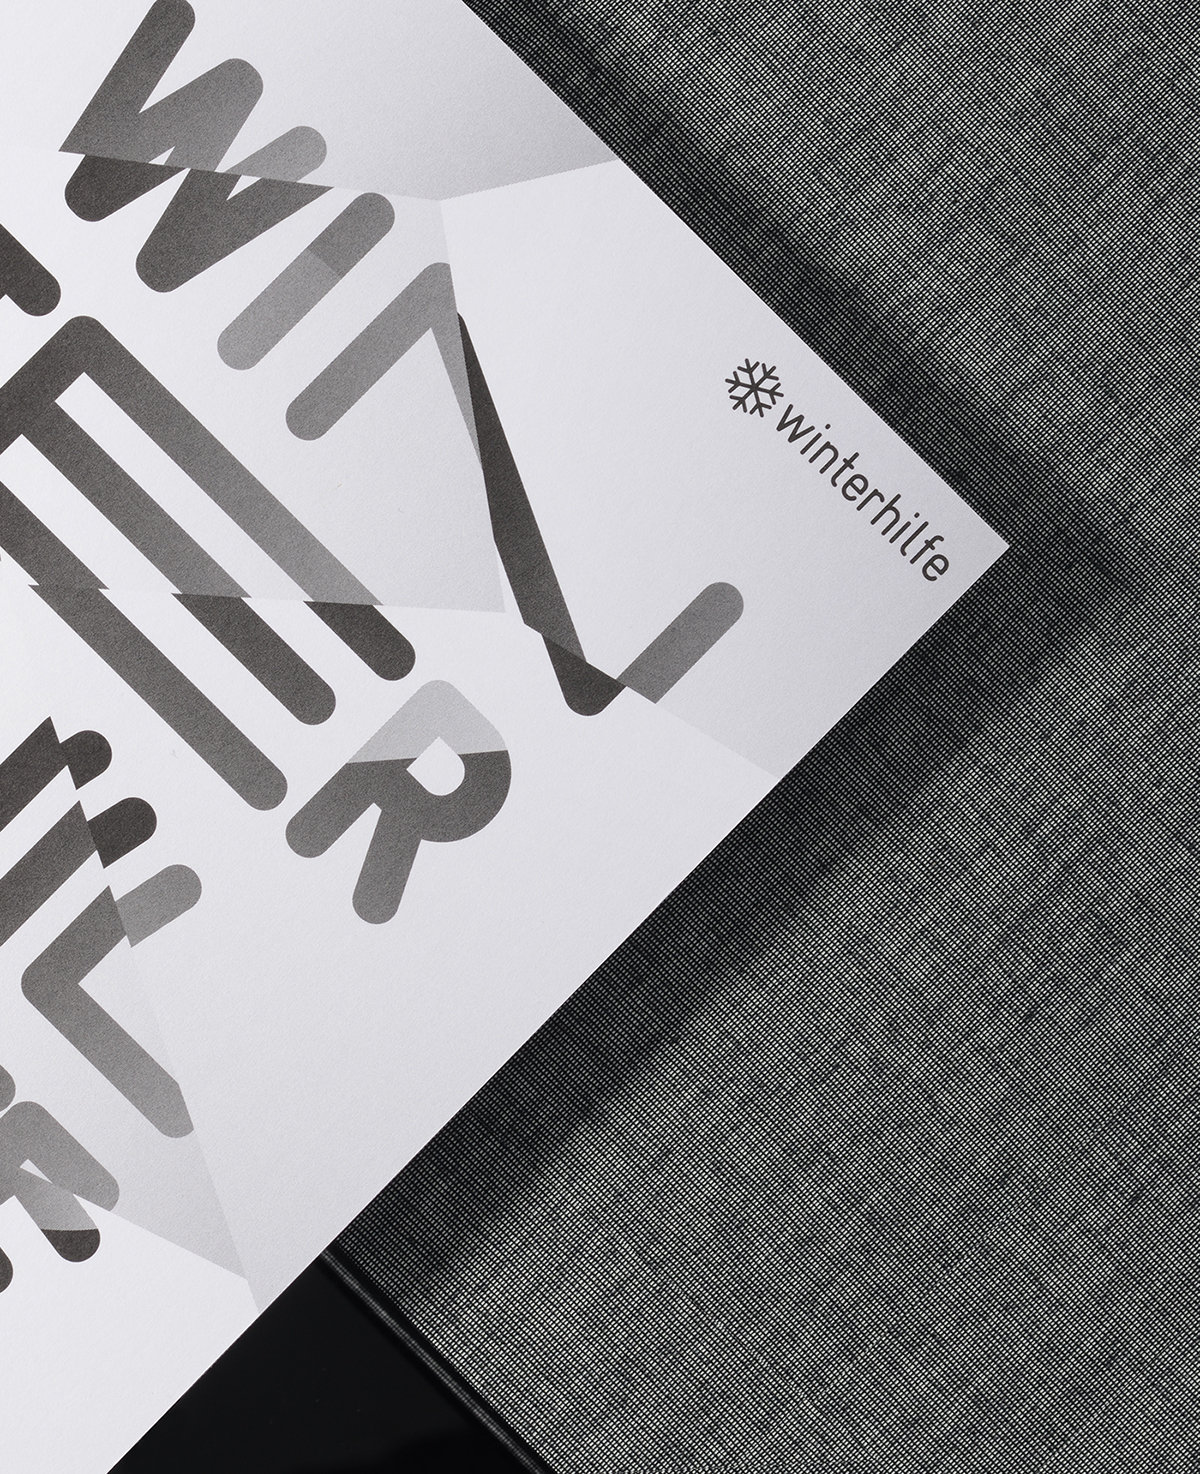 poster Exhibition  prind design Winterhilfe black/white flyer type posterdesign black and white editorial Stationery